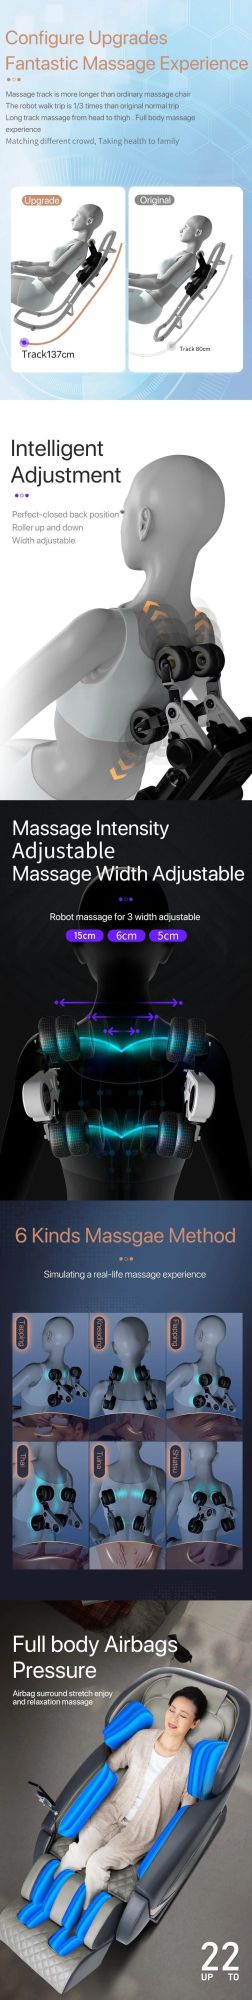 Factory Electric Shiatsu 3D Zero Gravity Commercial Relax Massage Chair